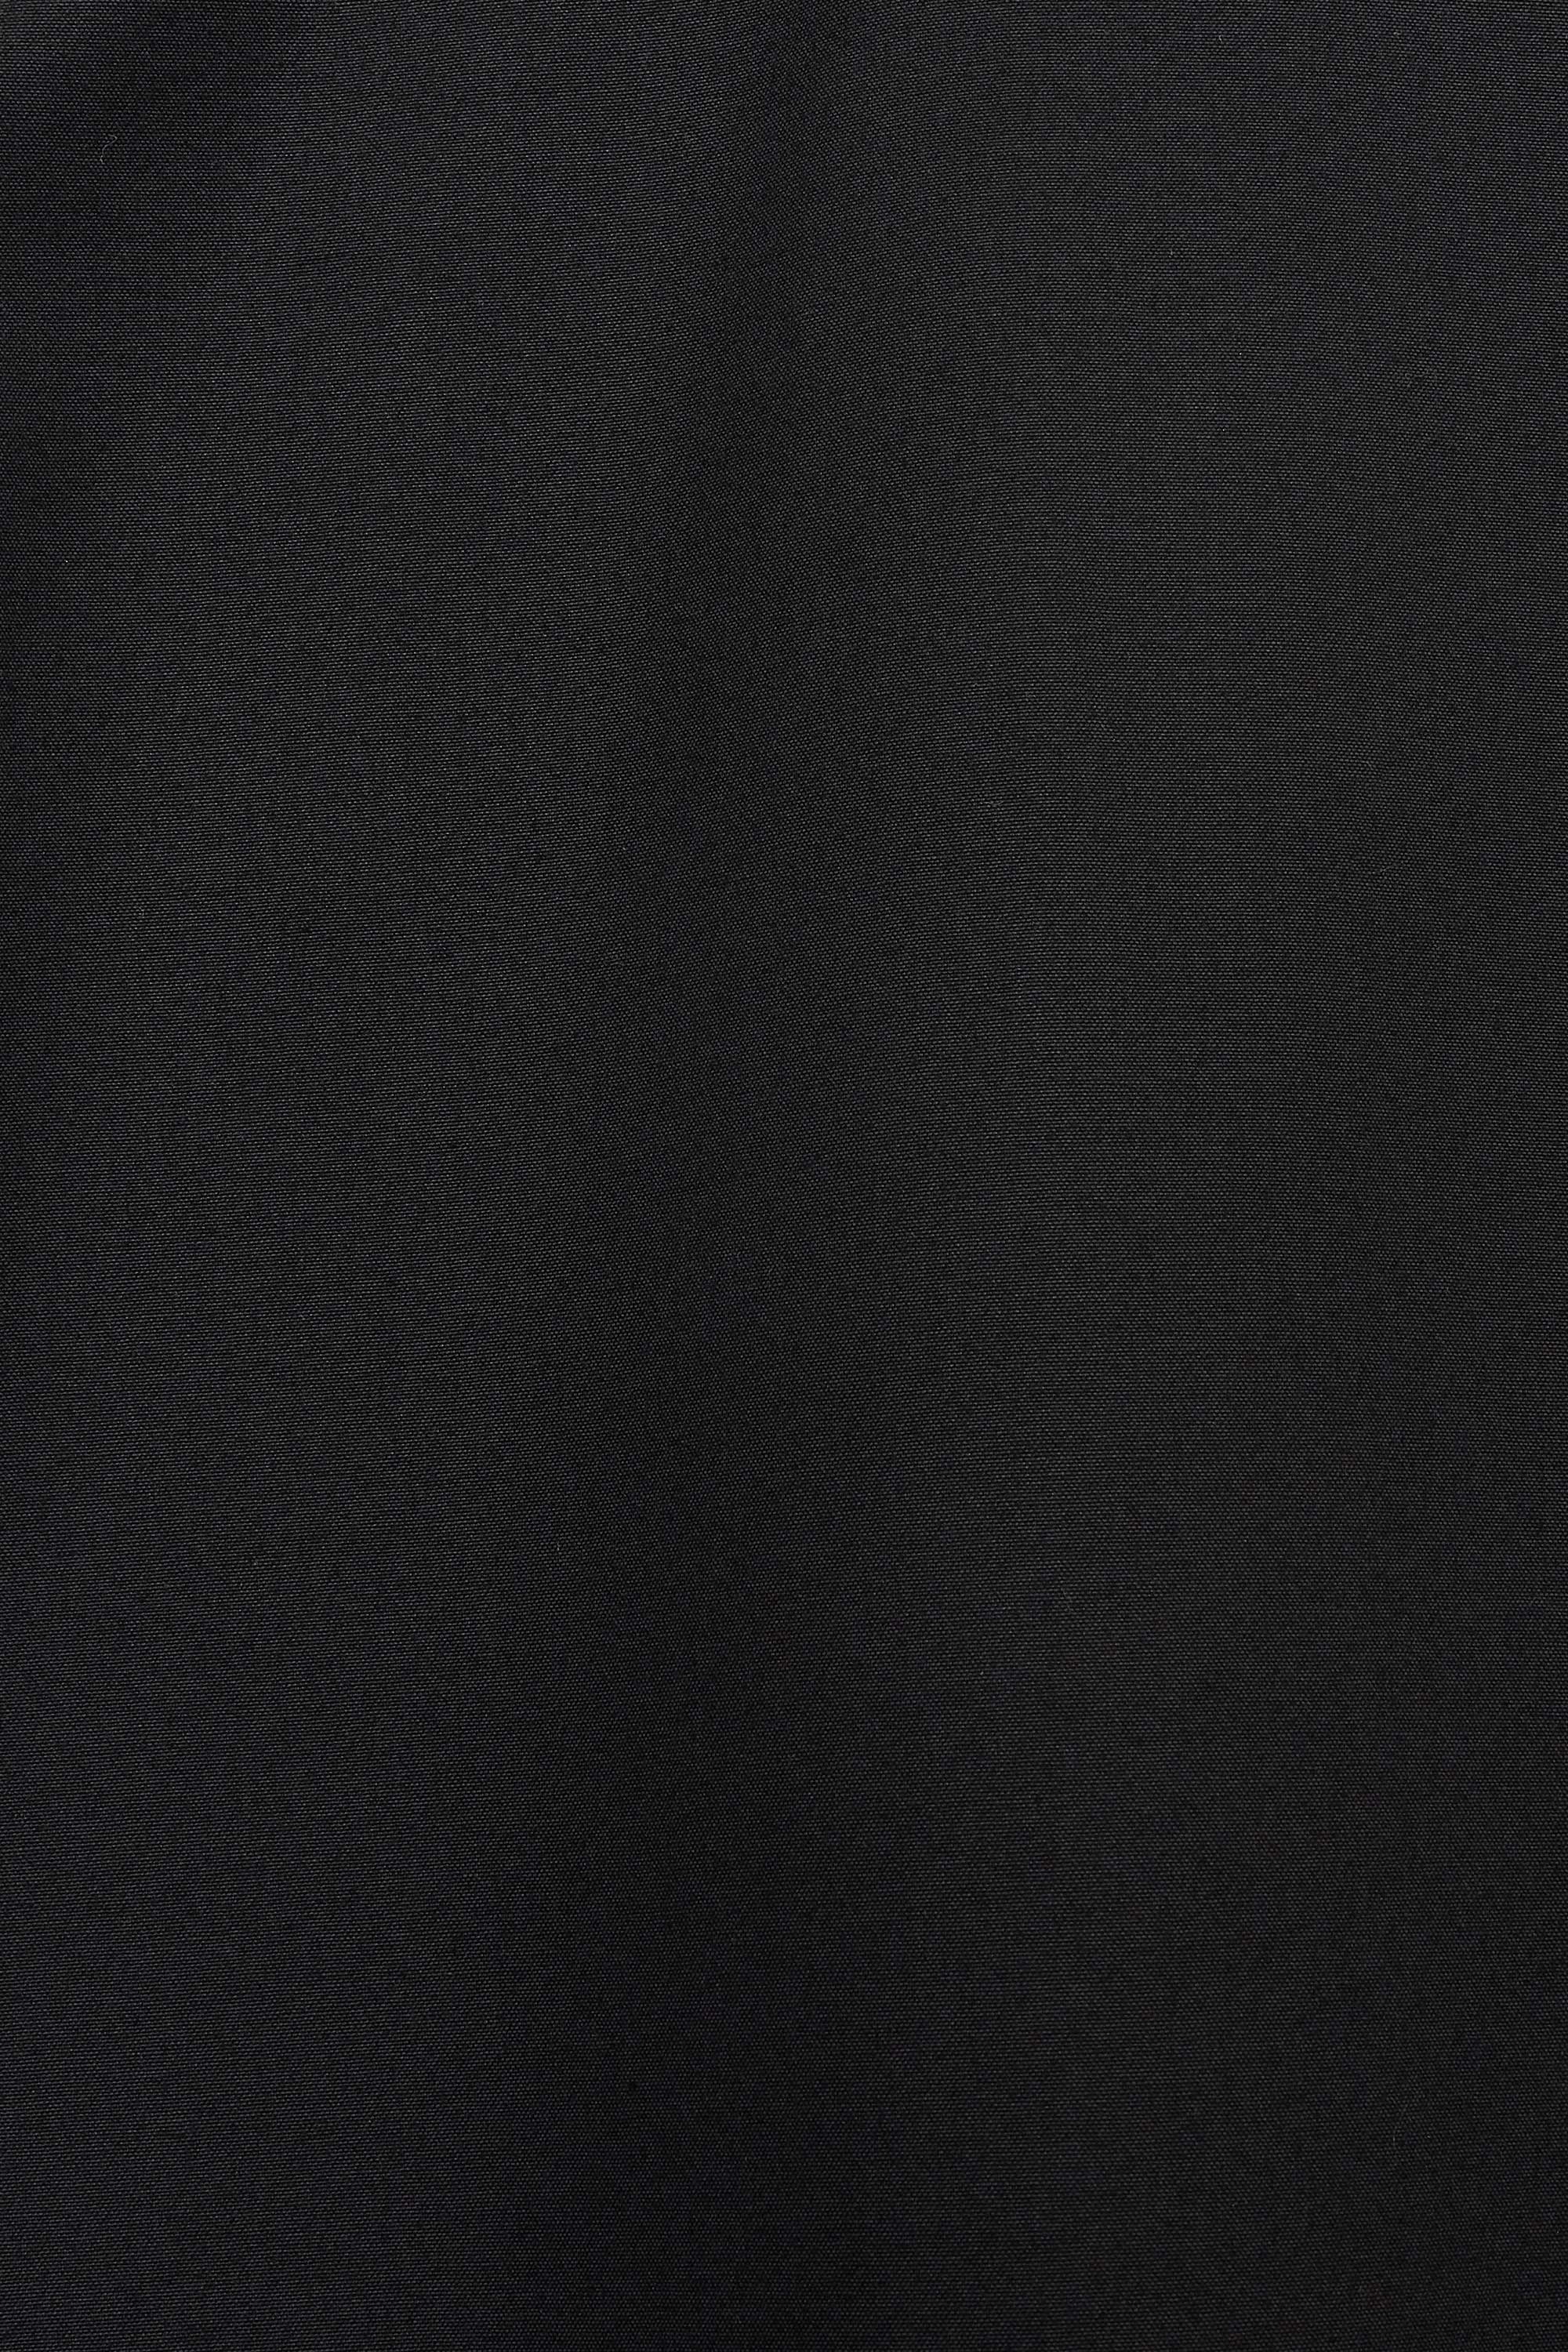 ORGANIC COTTON WEATHER CLOTH OUTDOORMAN JACKET, Black